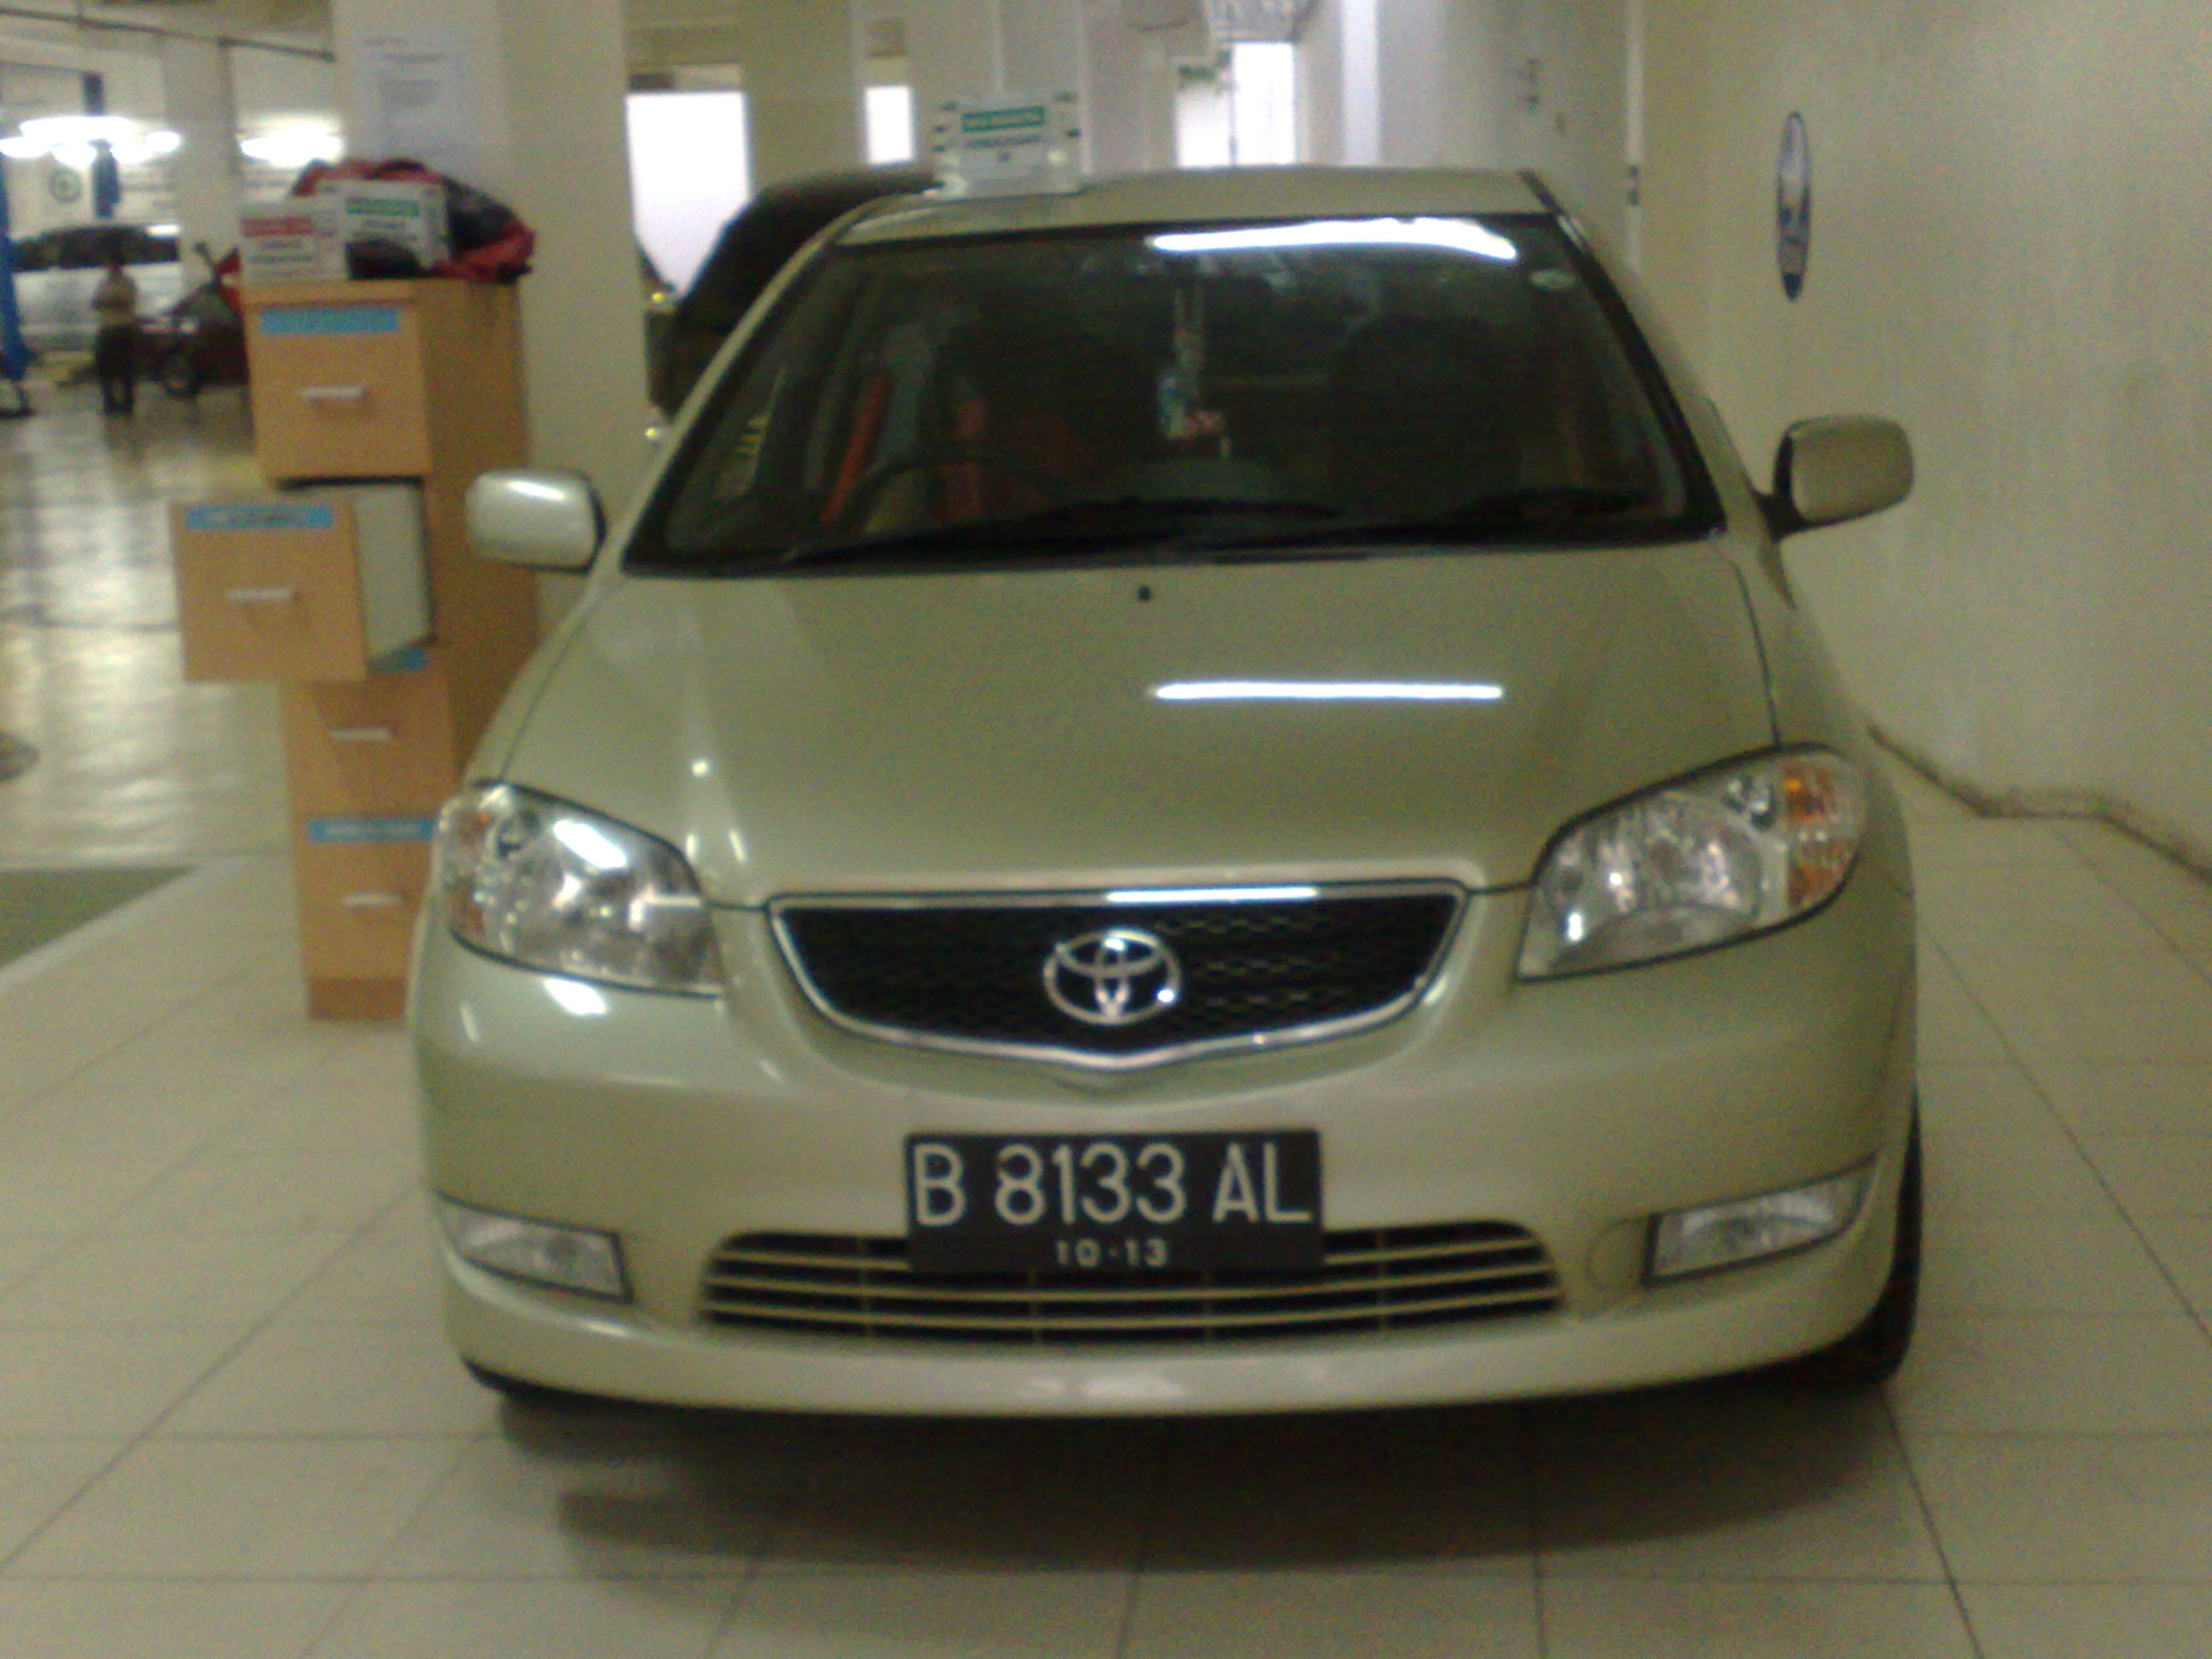 For Sale Toyota Vios Tahun 2003 Sold Out Toko Fikri Fikris